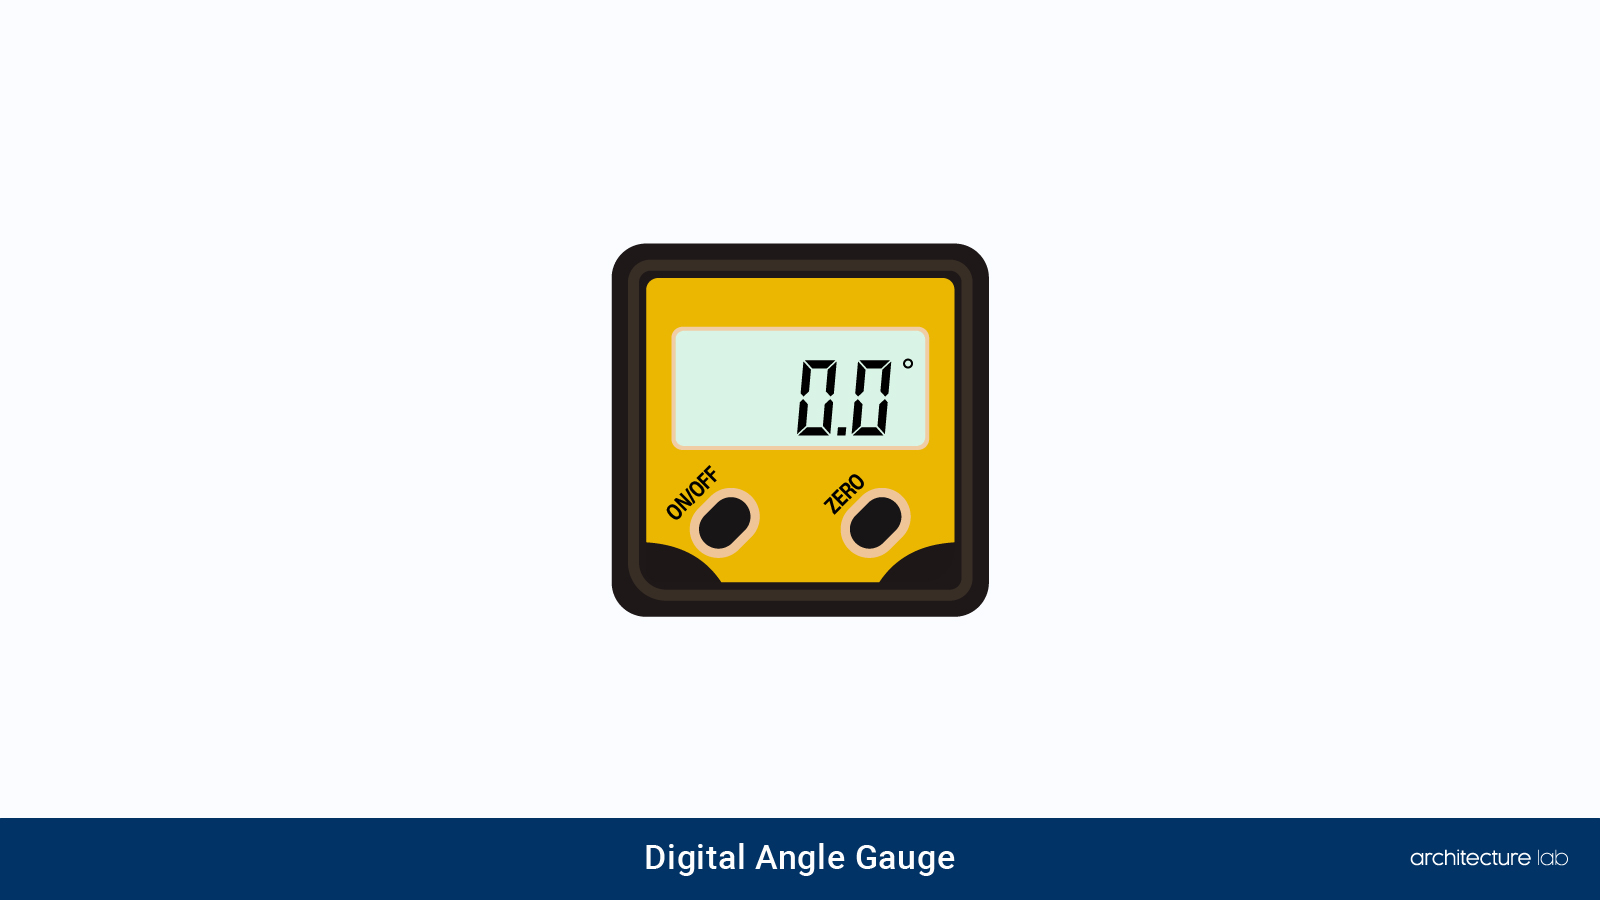 2. Digital angle gauge